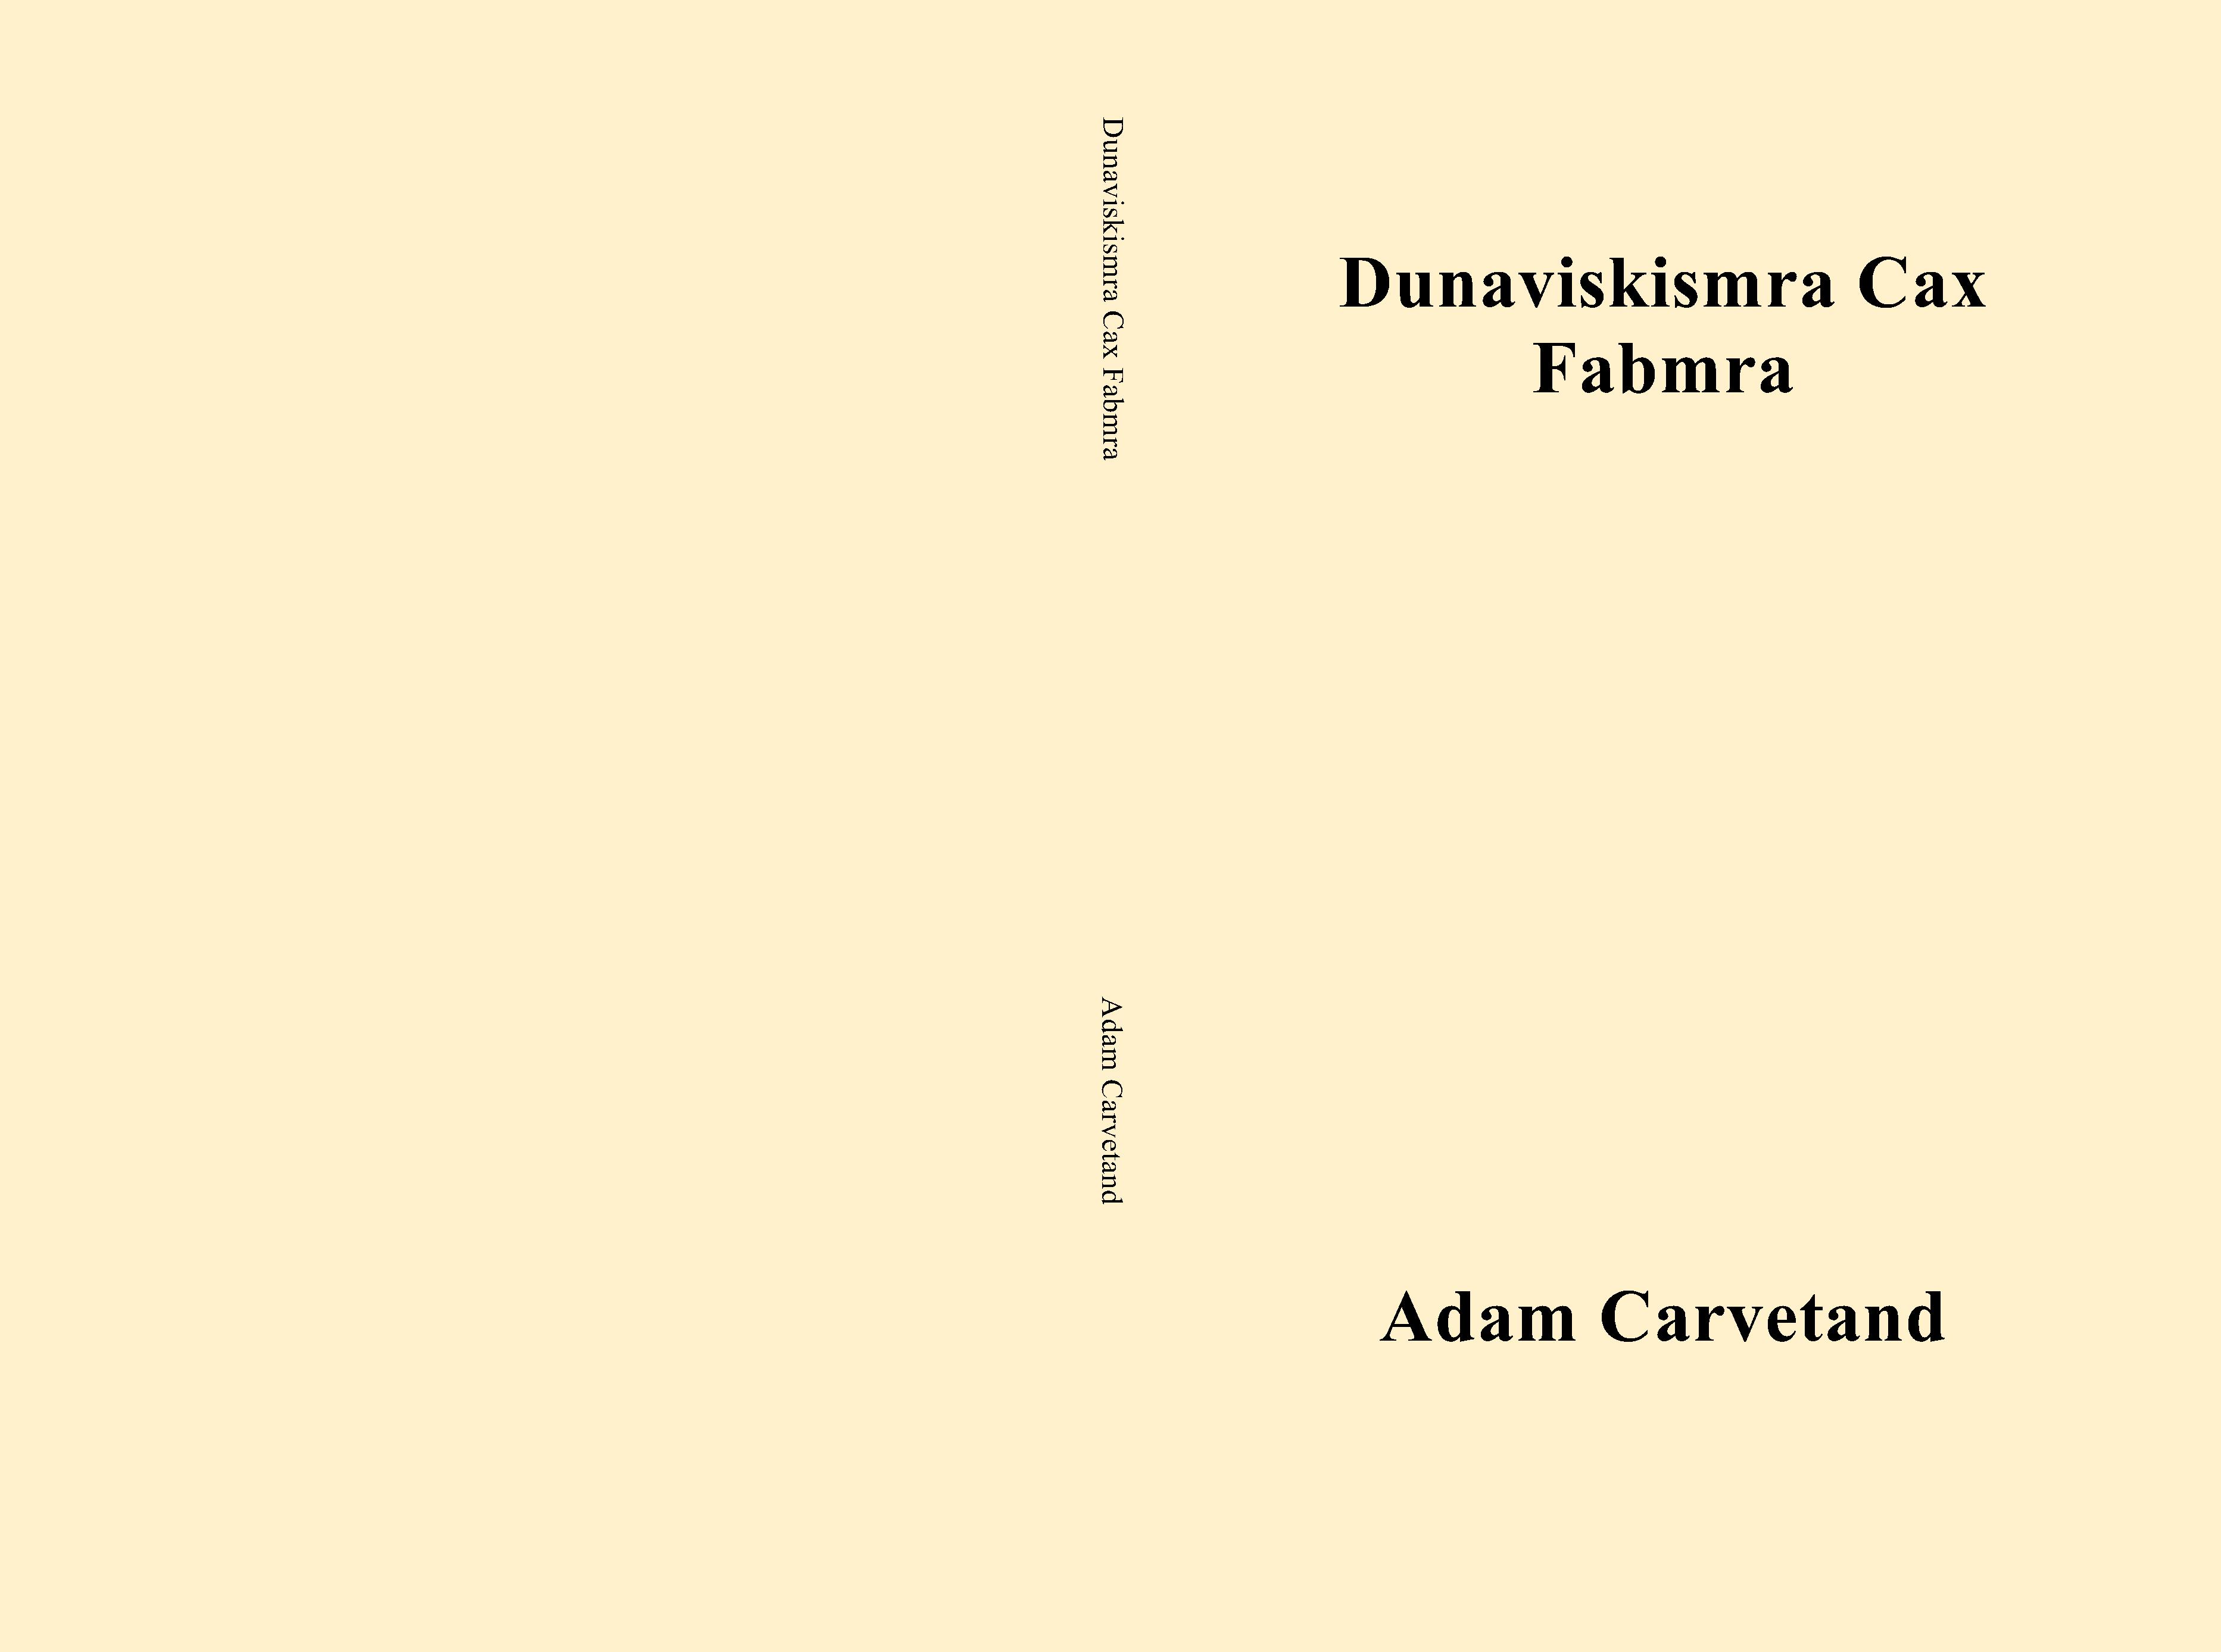 Dunaviskismra Cax Fabmra cover image